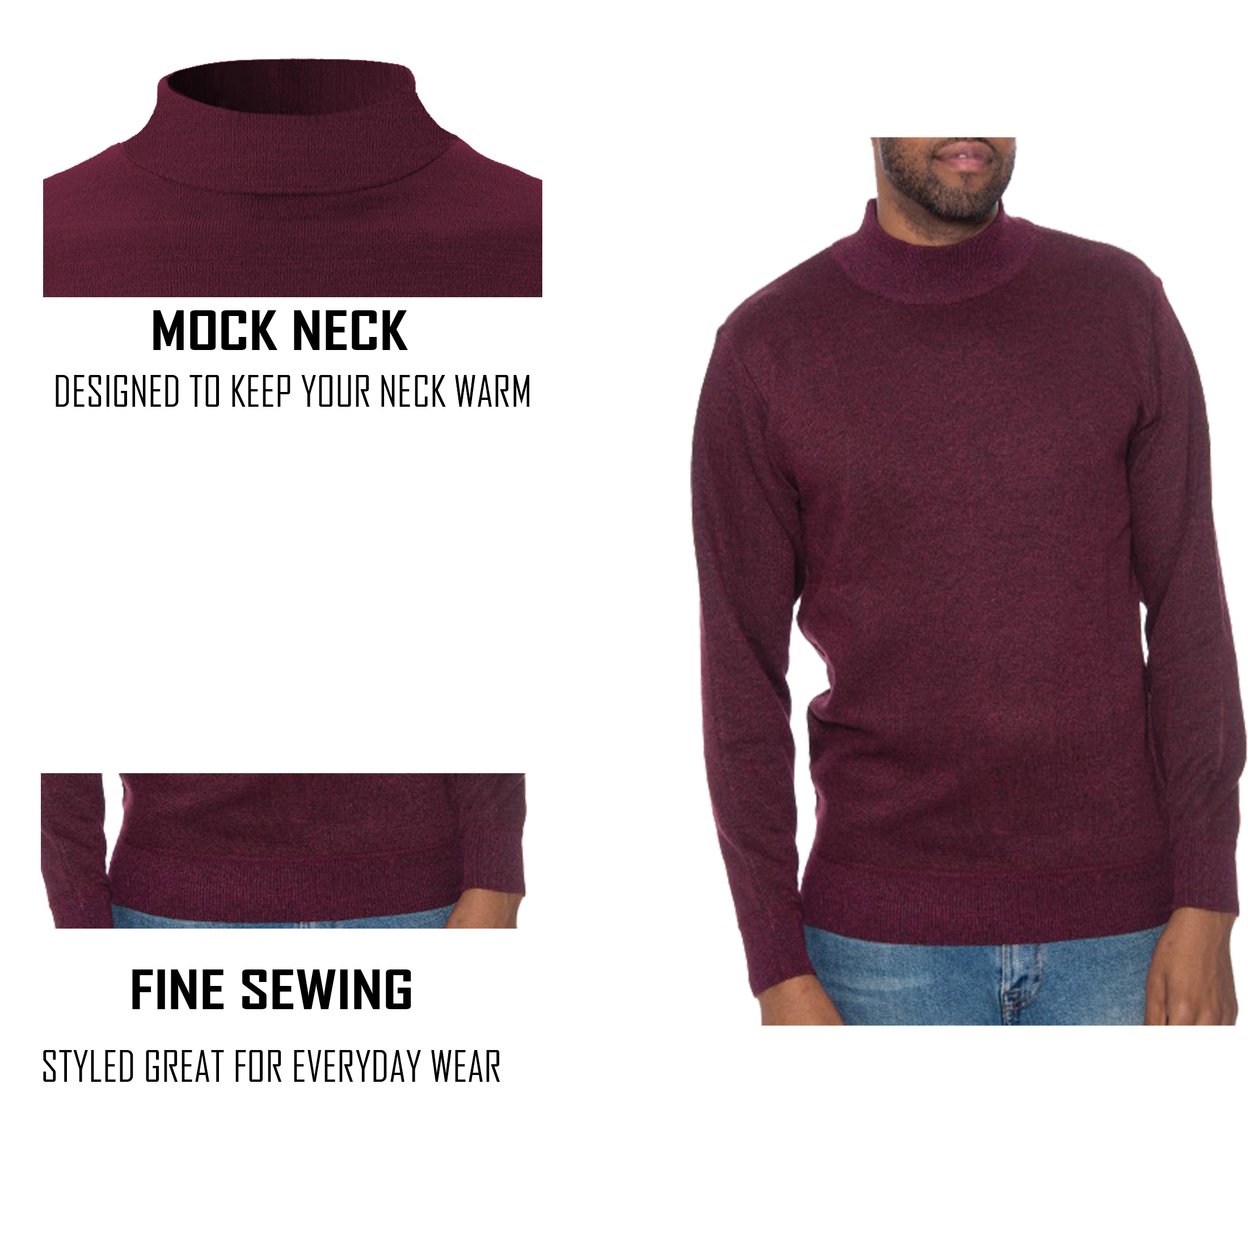 2-Pack: Men's Winter Warm Cozy Knit Slim Fit Mock Neck Sweater - Black & White, Small